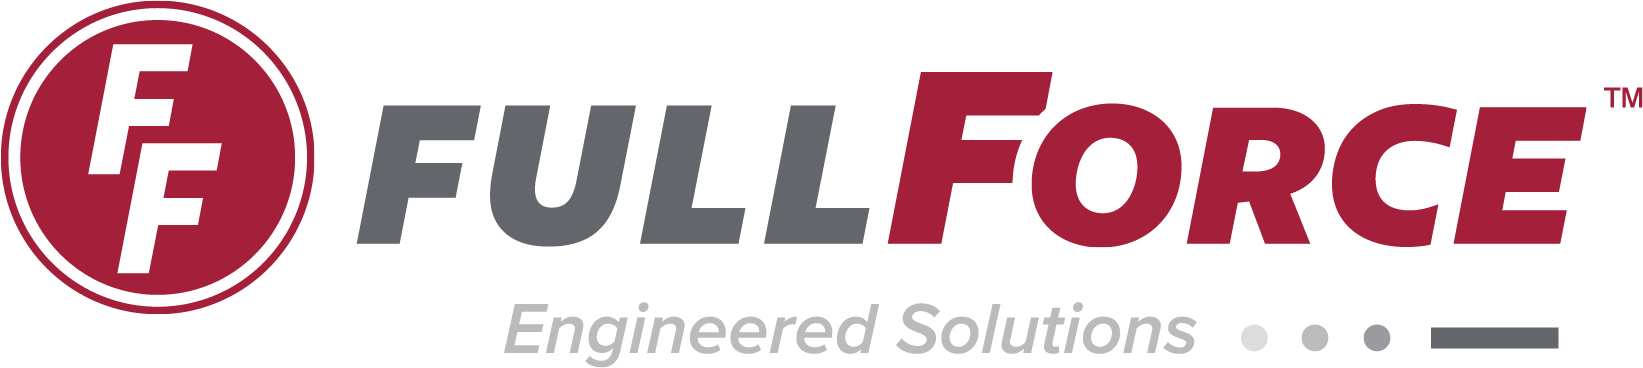 FullForce Logo-Engineered Solutions-TM